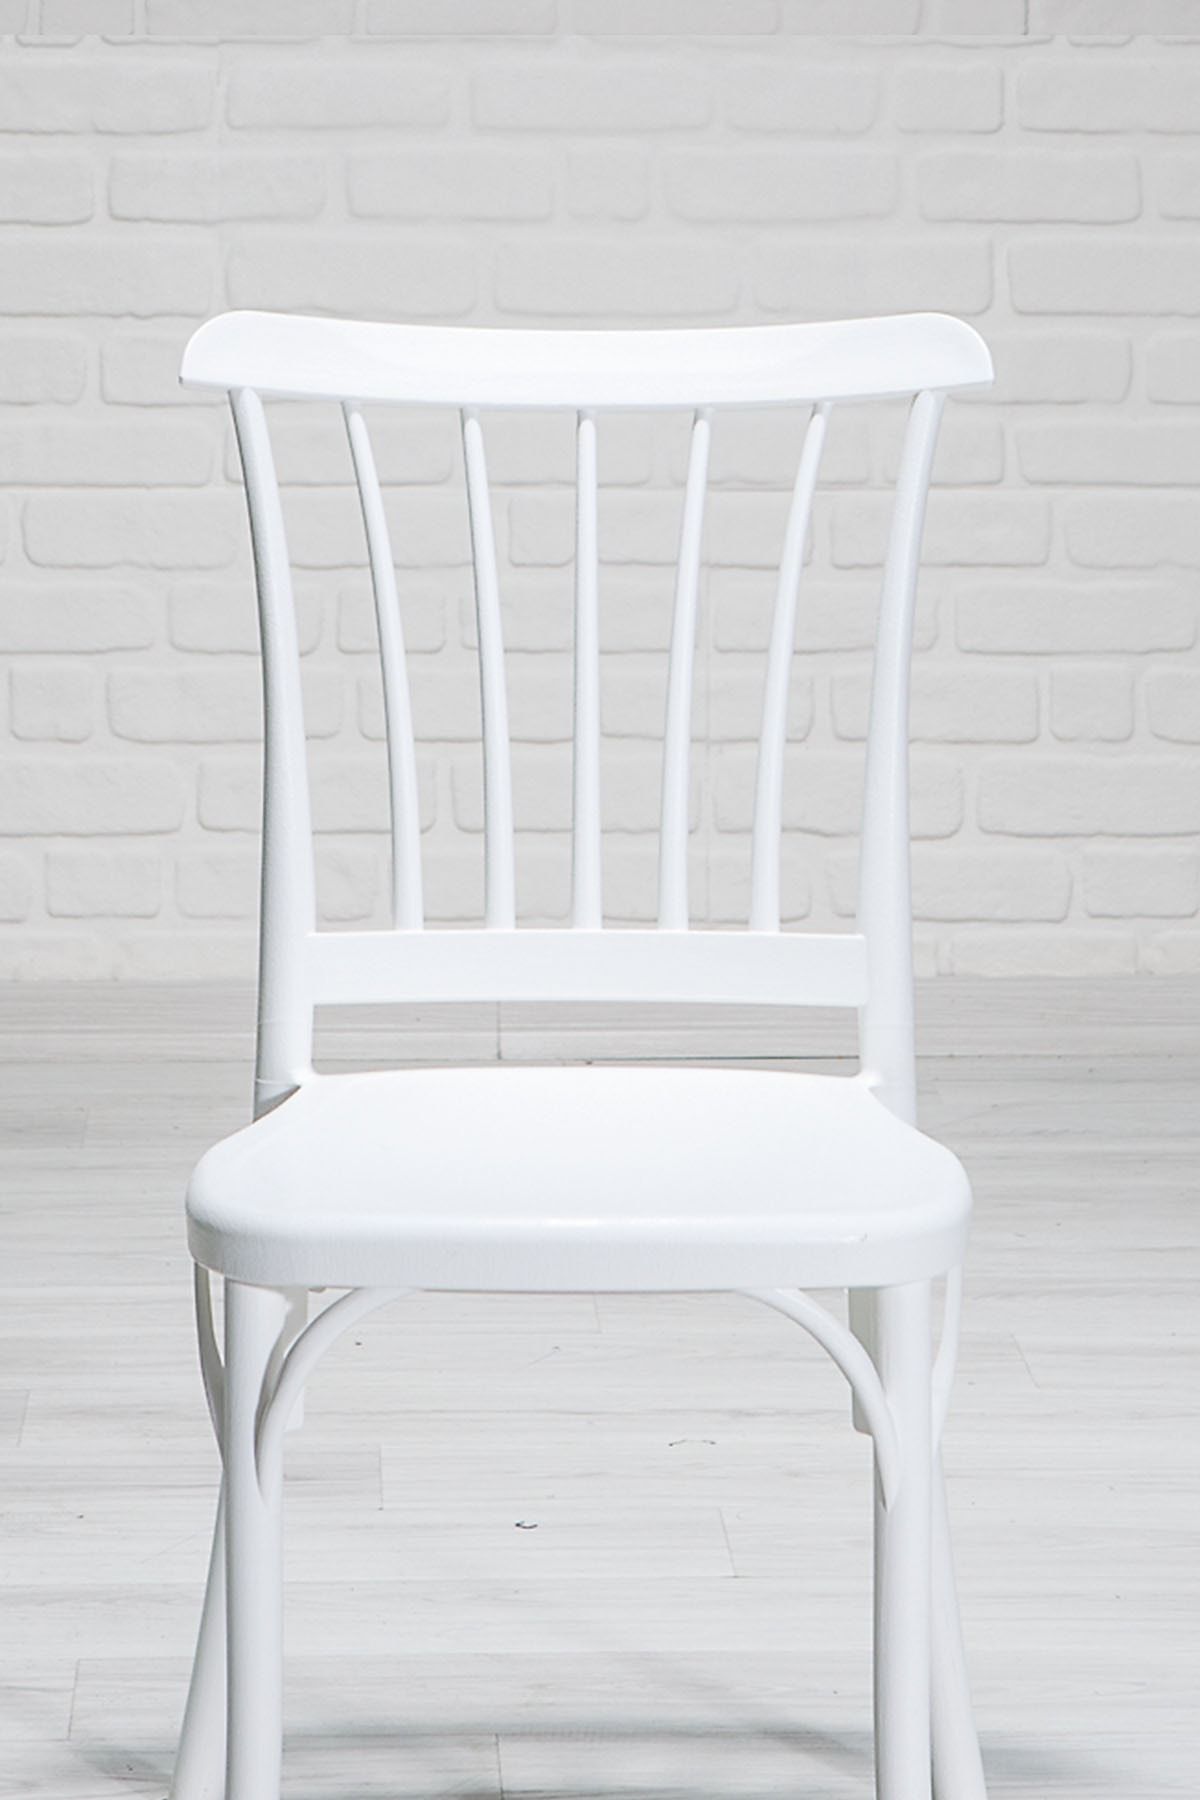 MOBETTO Violet Home Mutfak Sandalyesi 4 Adet - Beyaz